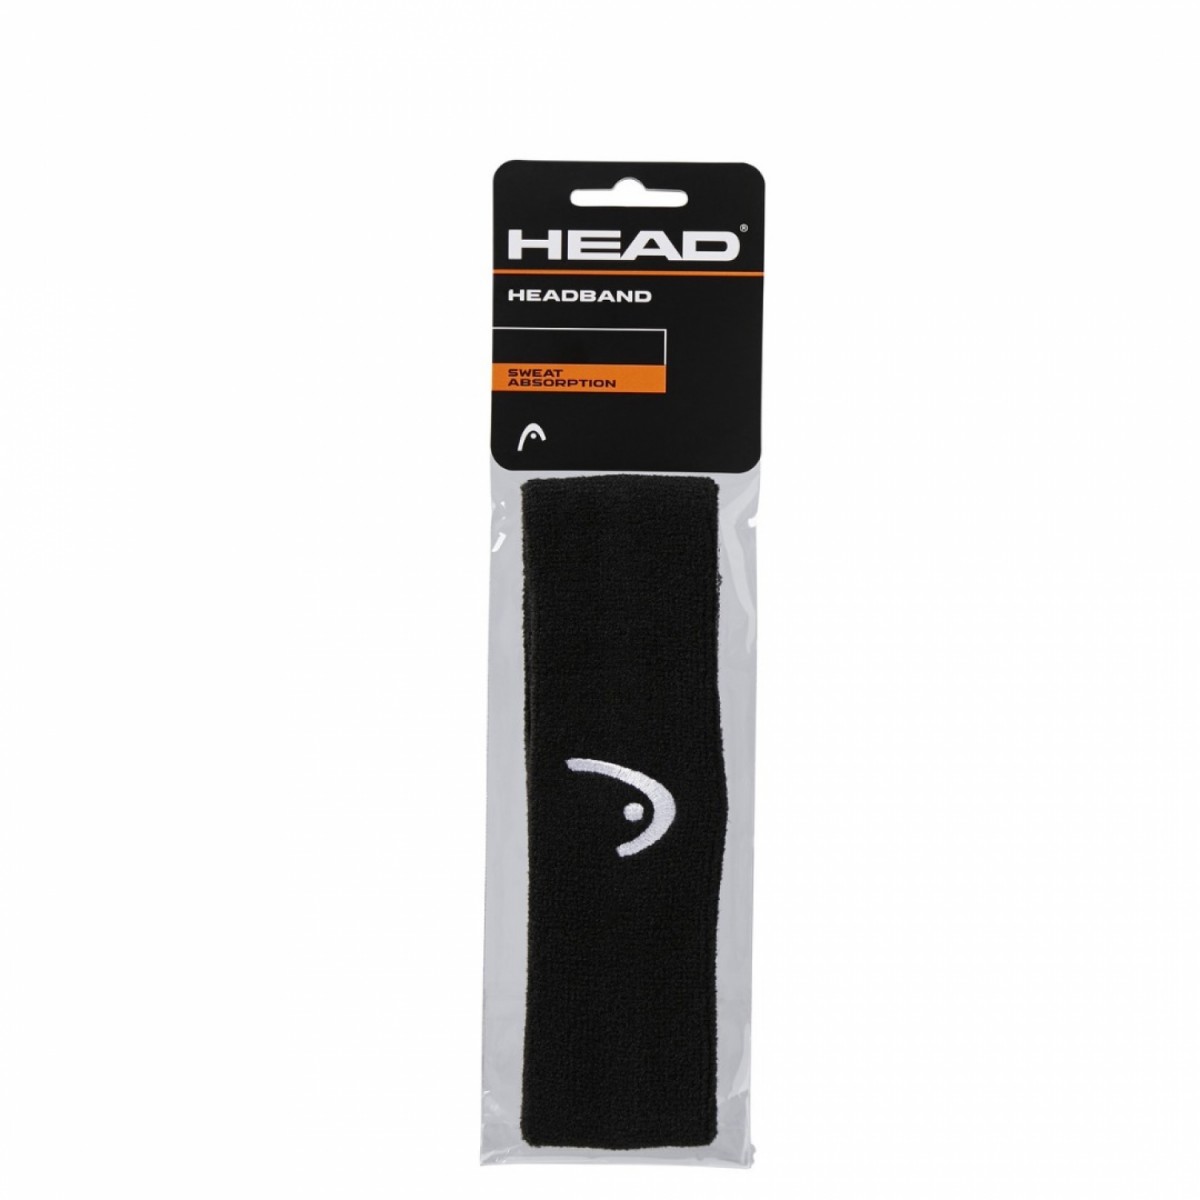 Повязка на голову Head Headband black